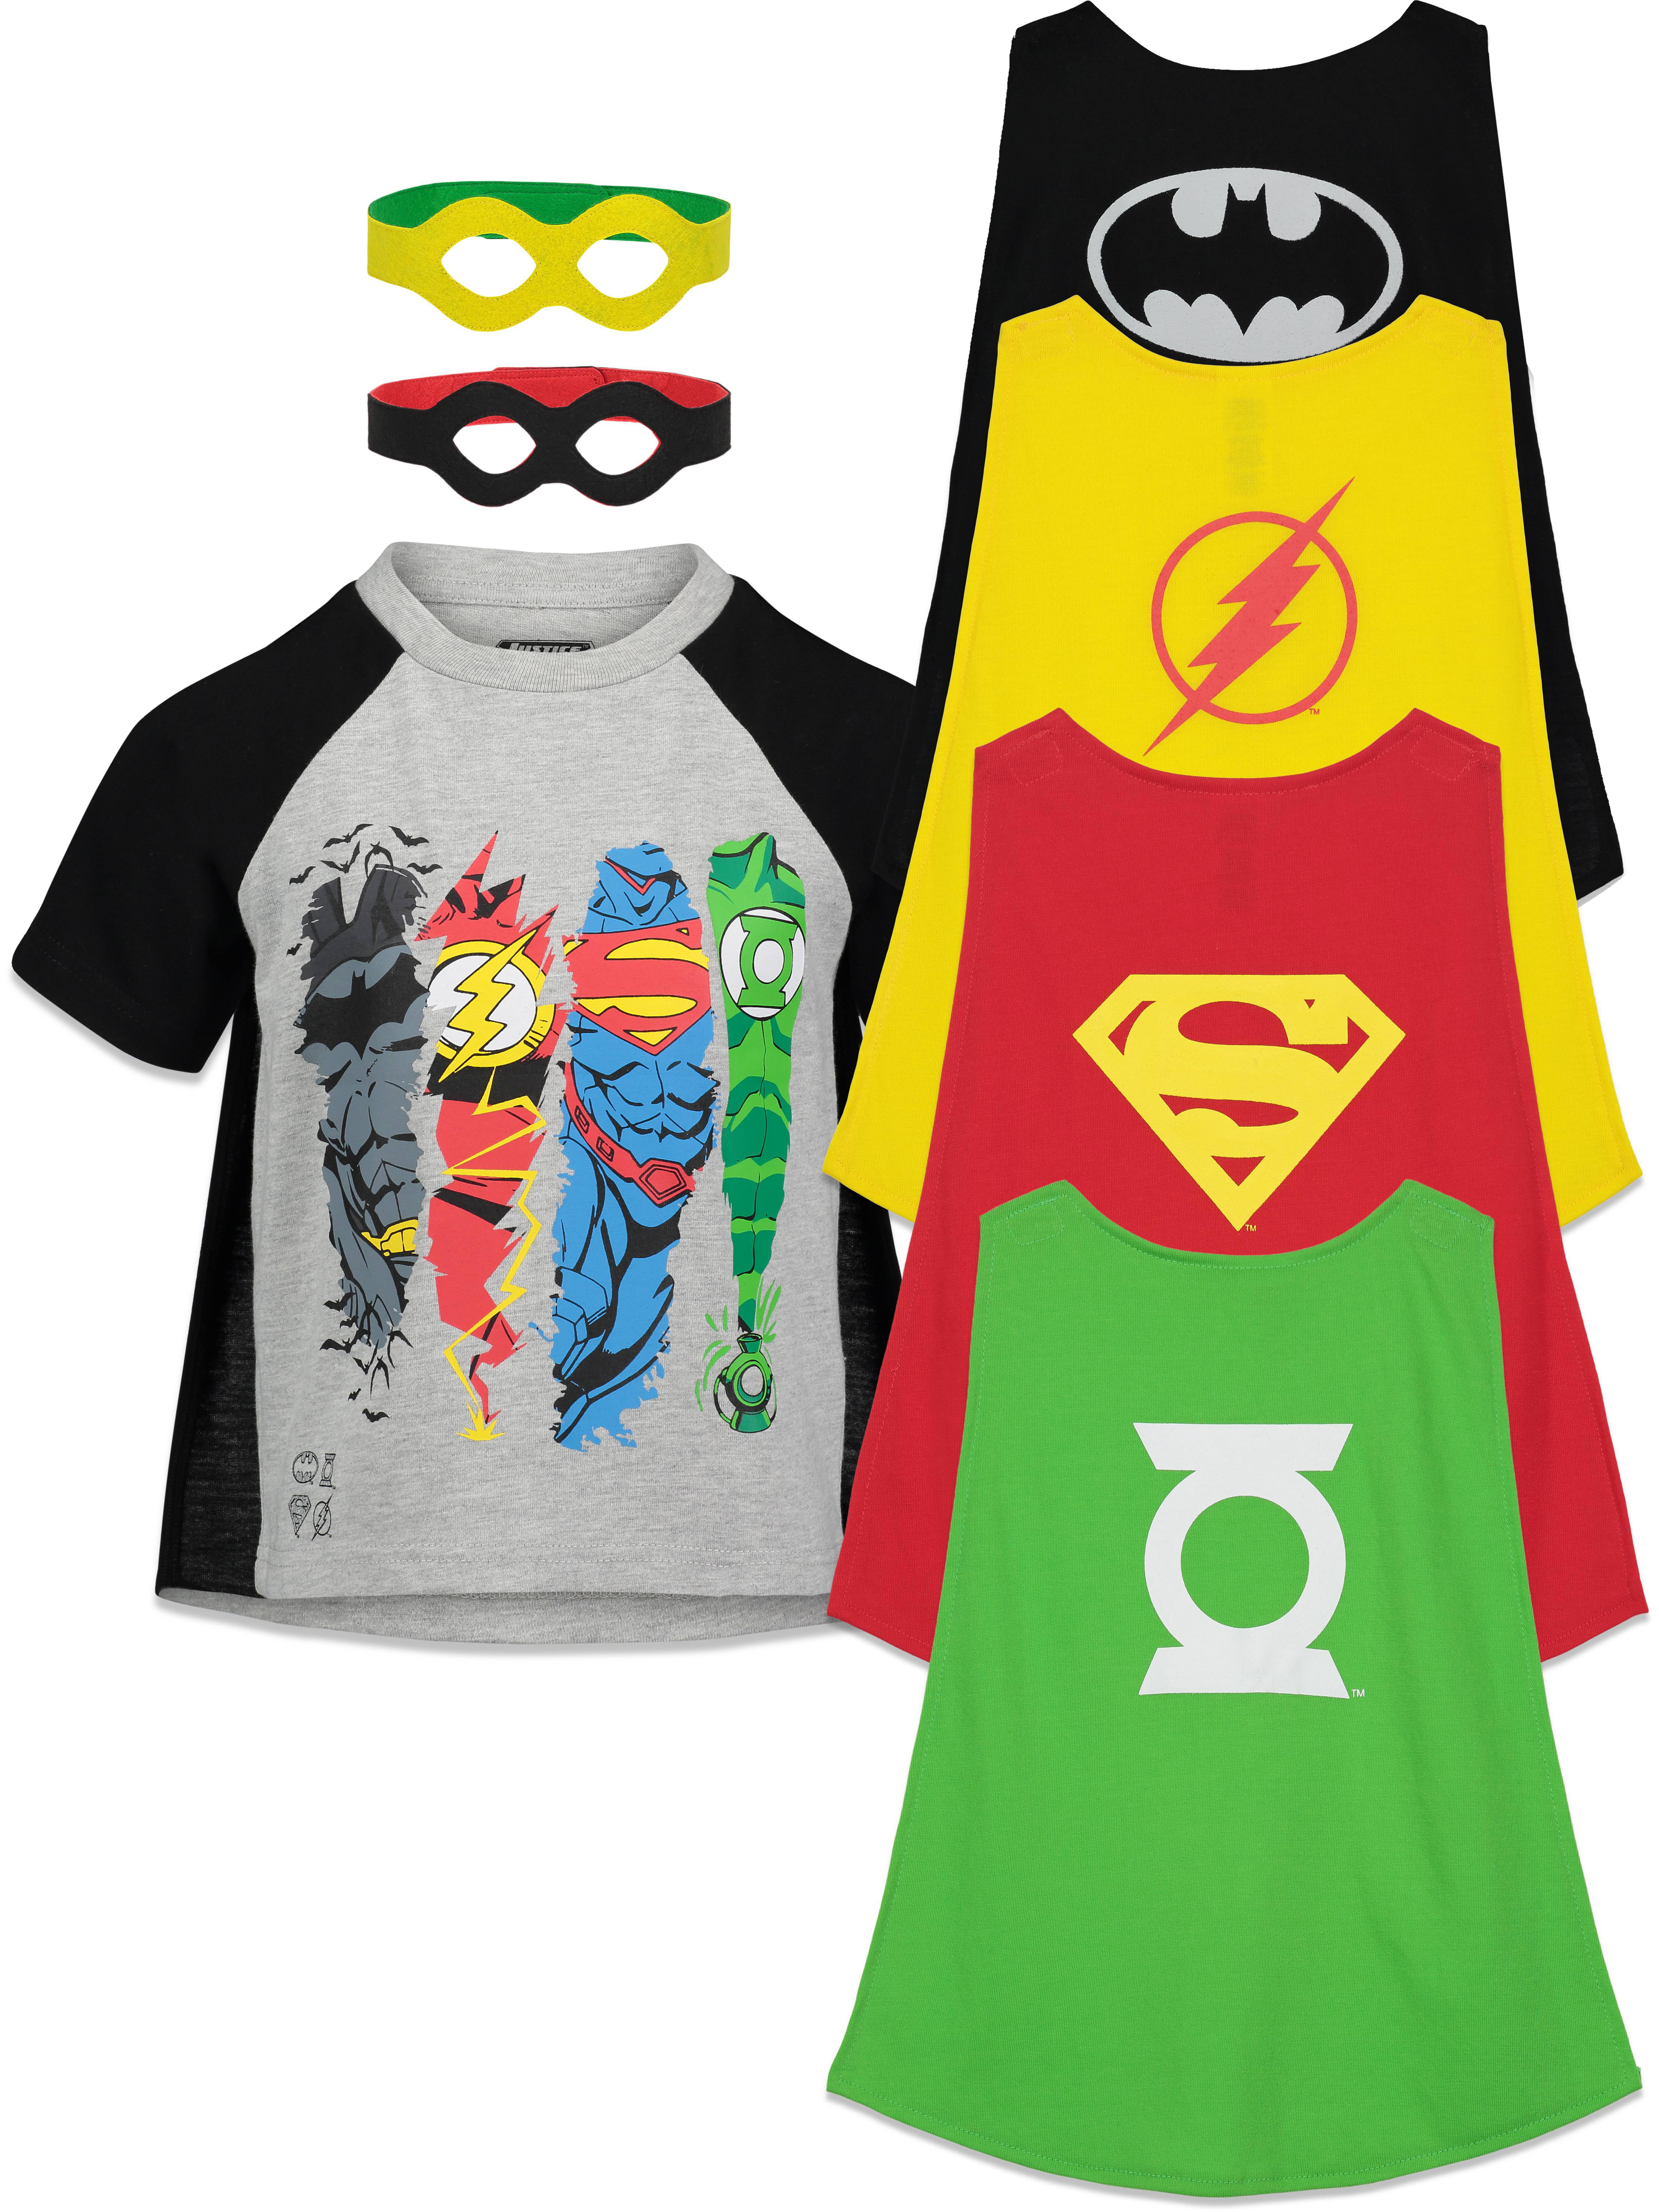 NEW Shazam Boys T-Shirt Justice League Size X Small 4/5 